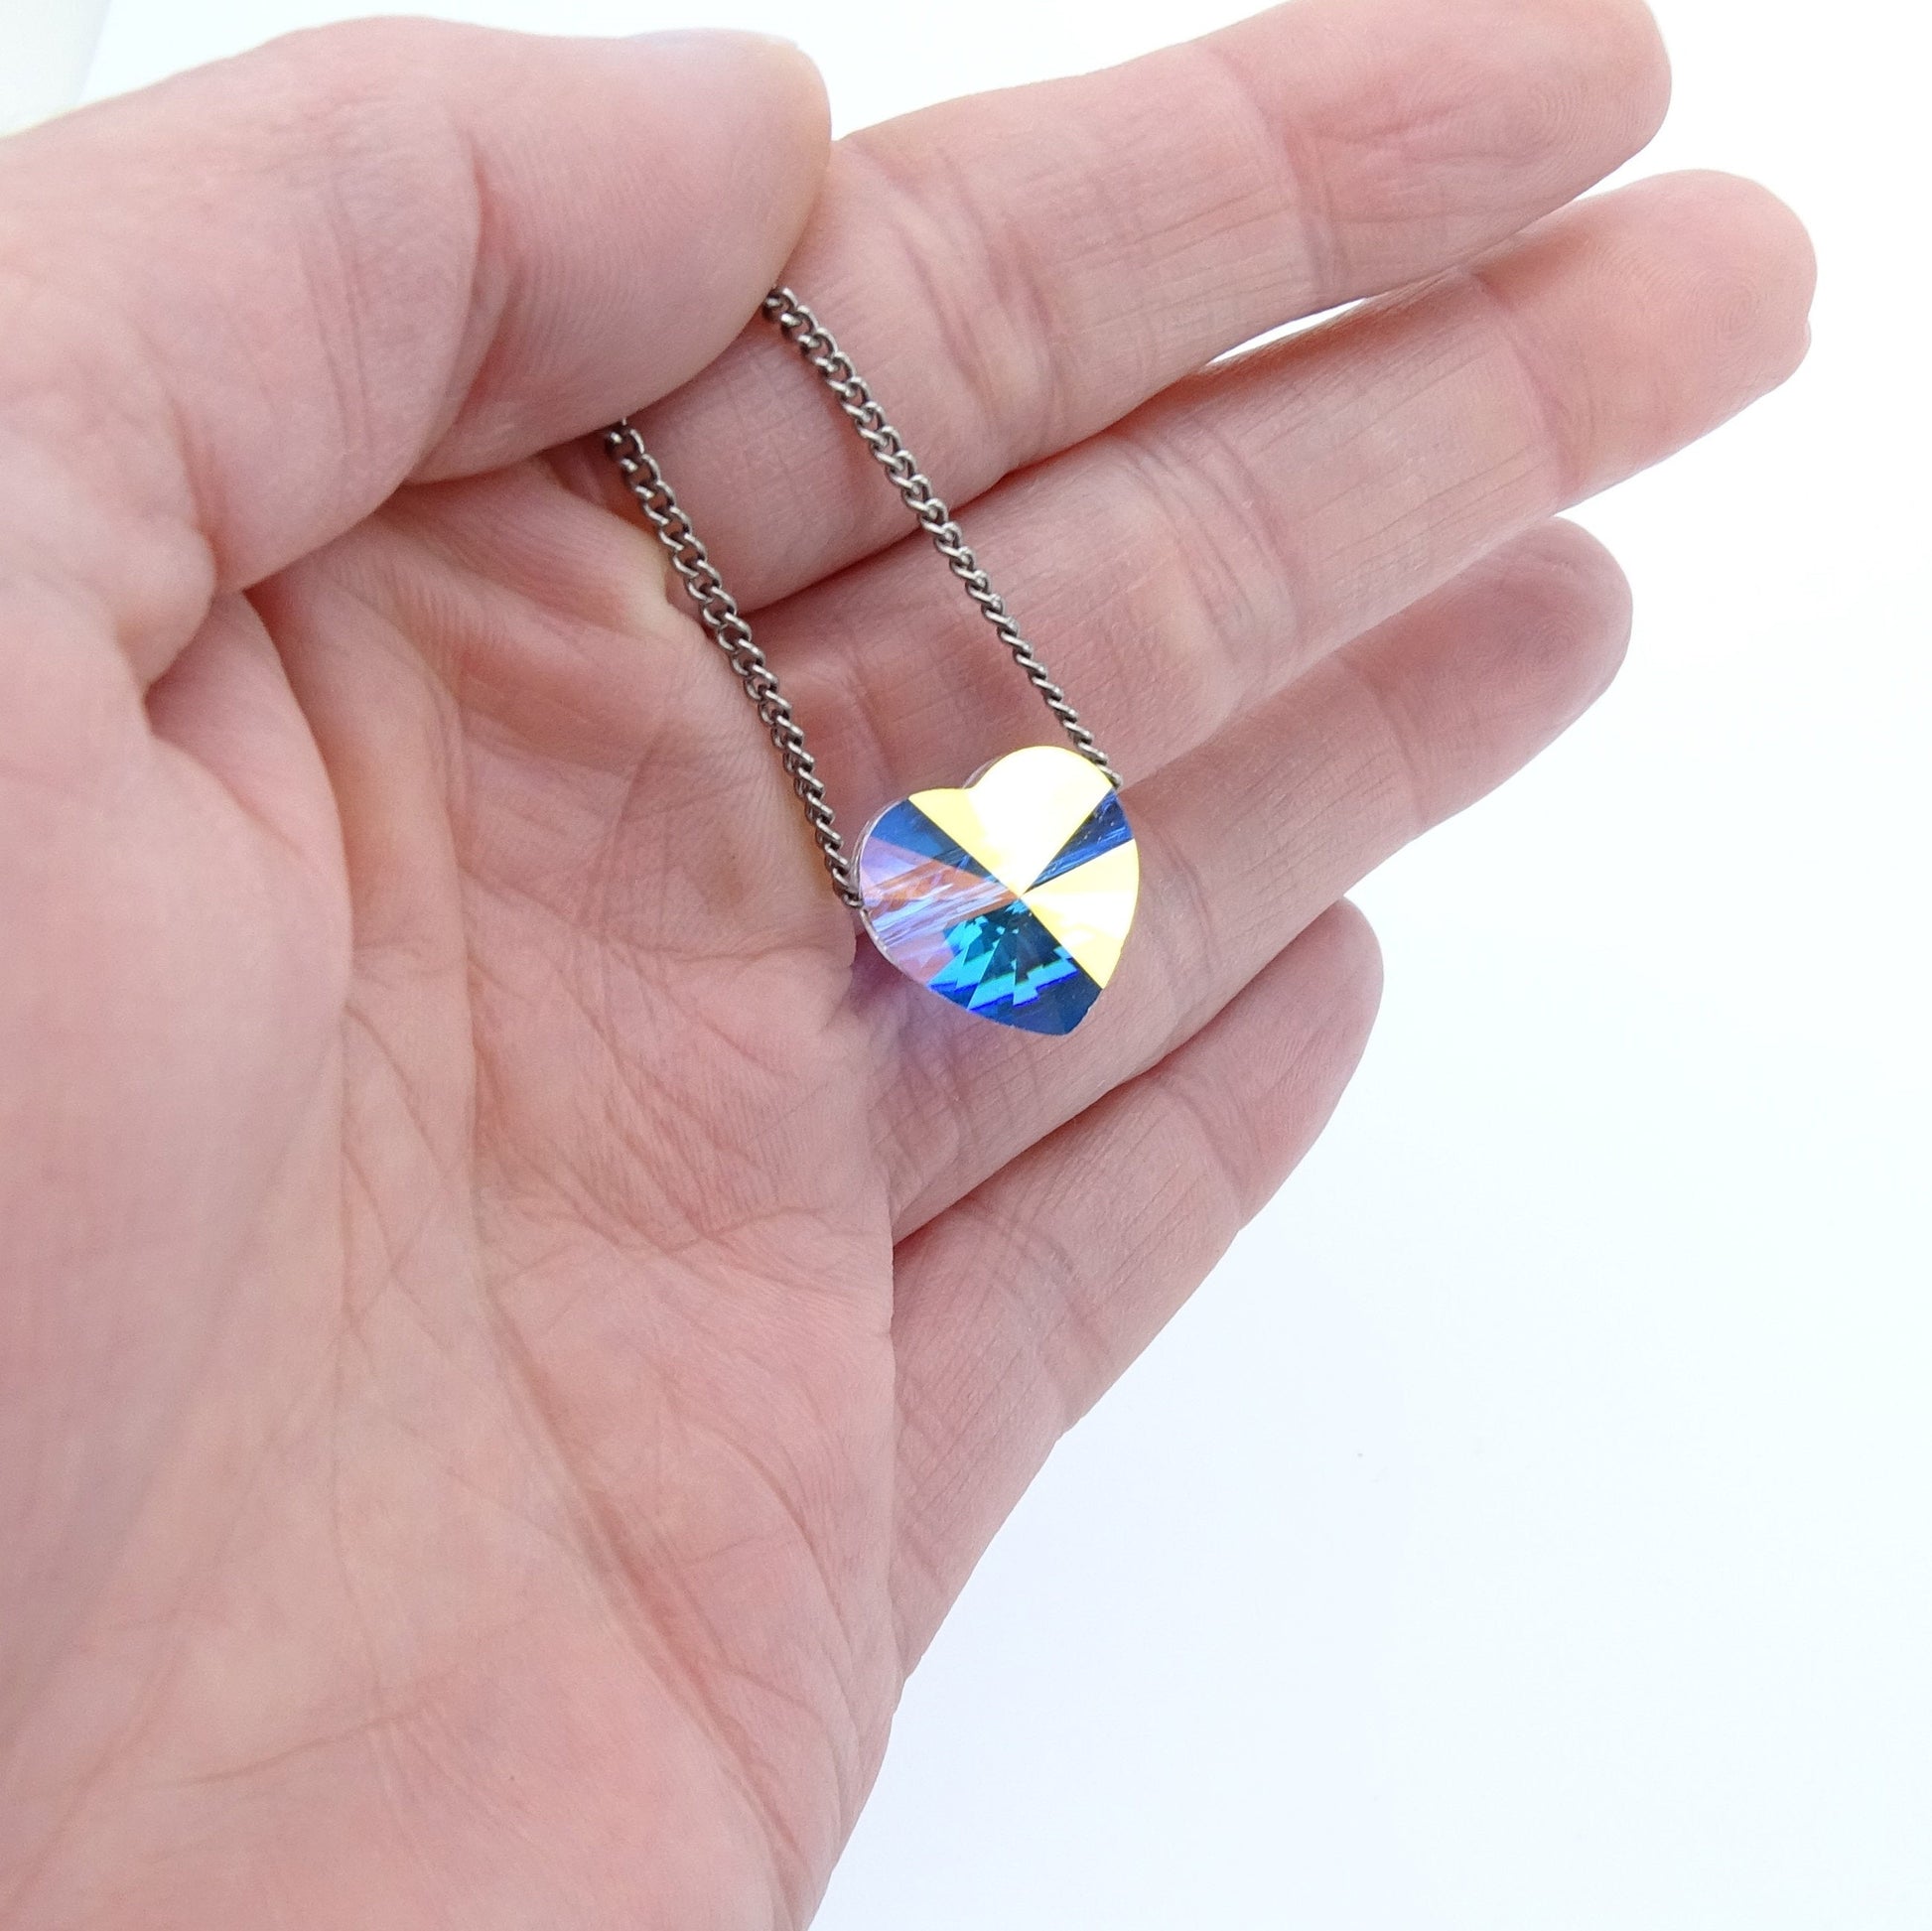 Aurora Borealis Swarovski Crystal Floating Heart Titanium Necklace, Clear AB Heart, Hypoallergenic Nickel Free Necklace for Sensitive Skin